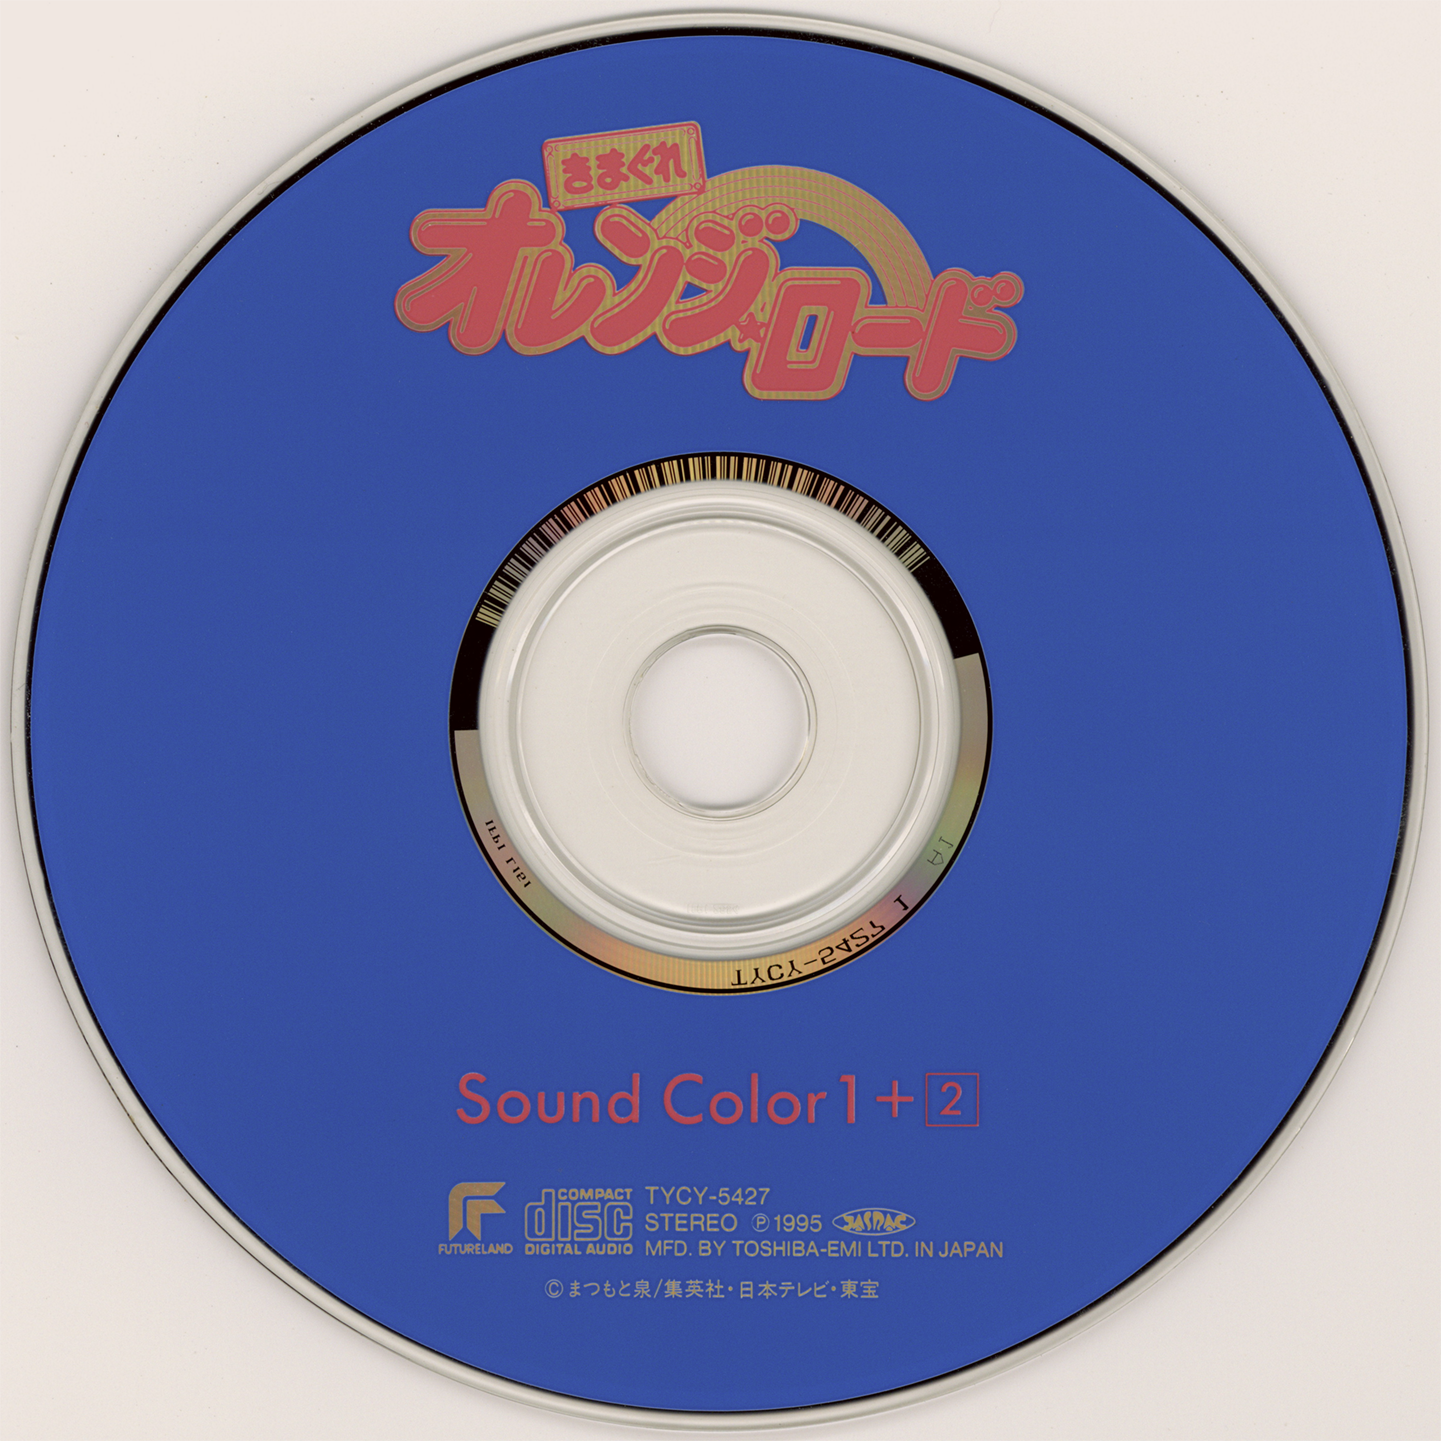 Release “Kimagure Orange Road☆Sound Color 1 +2” by 鷺巣詩郎 